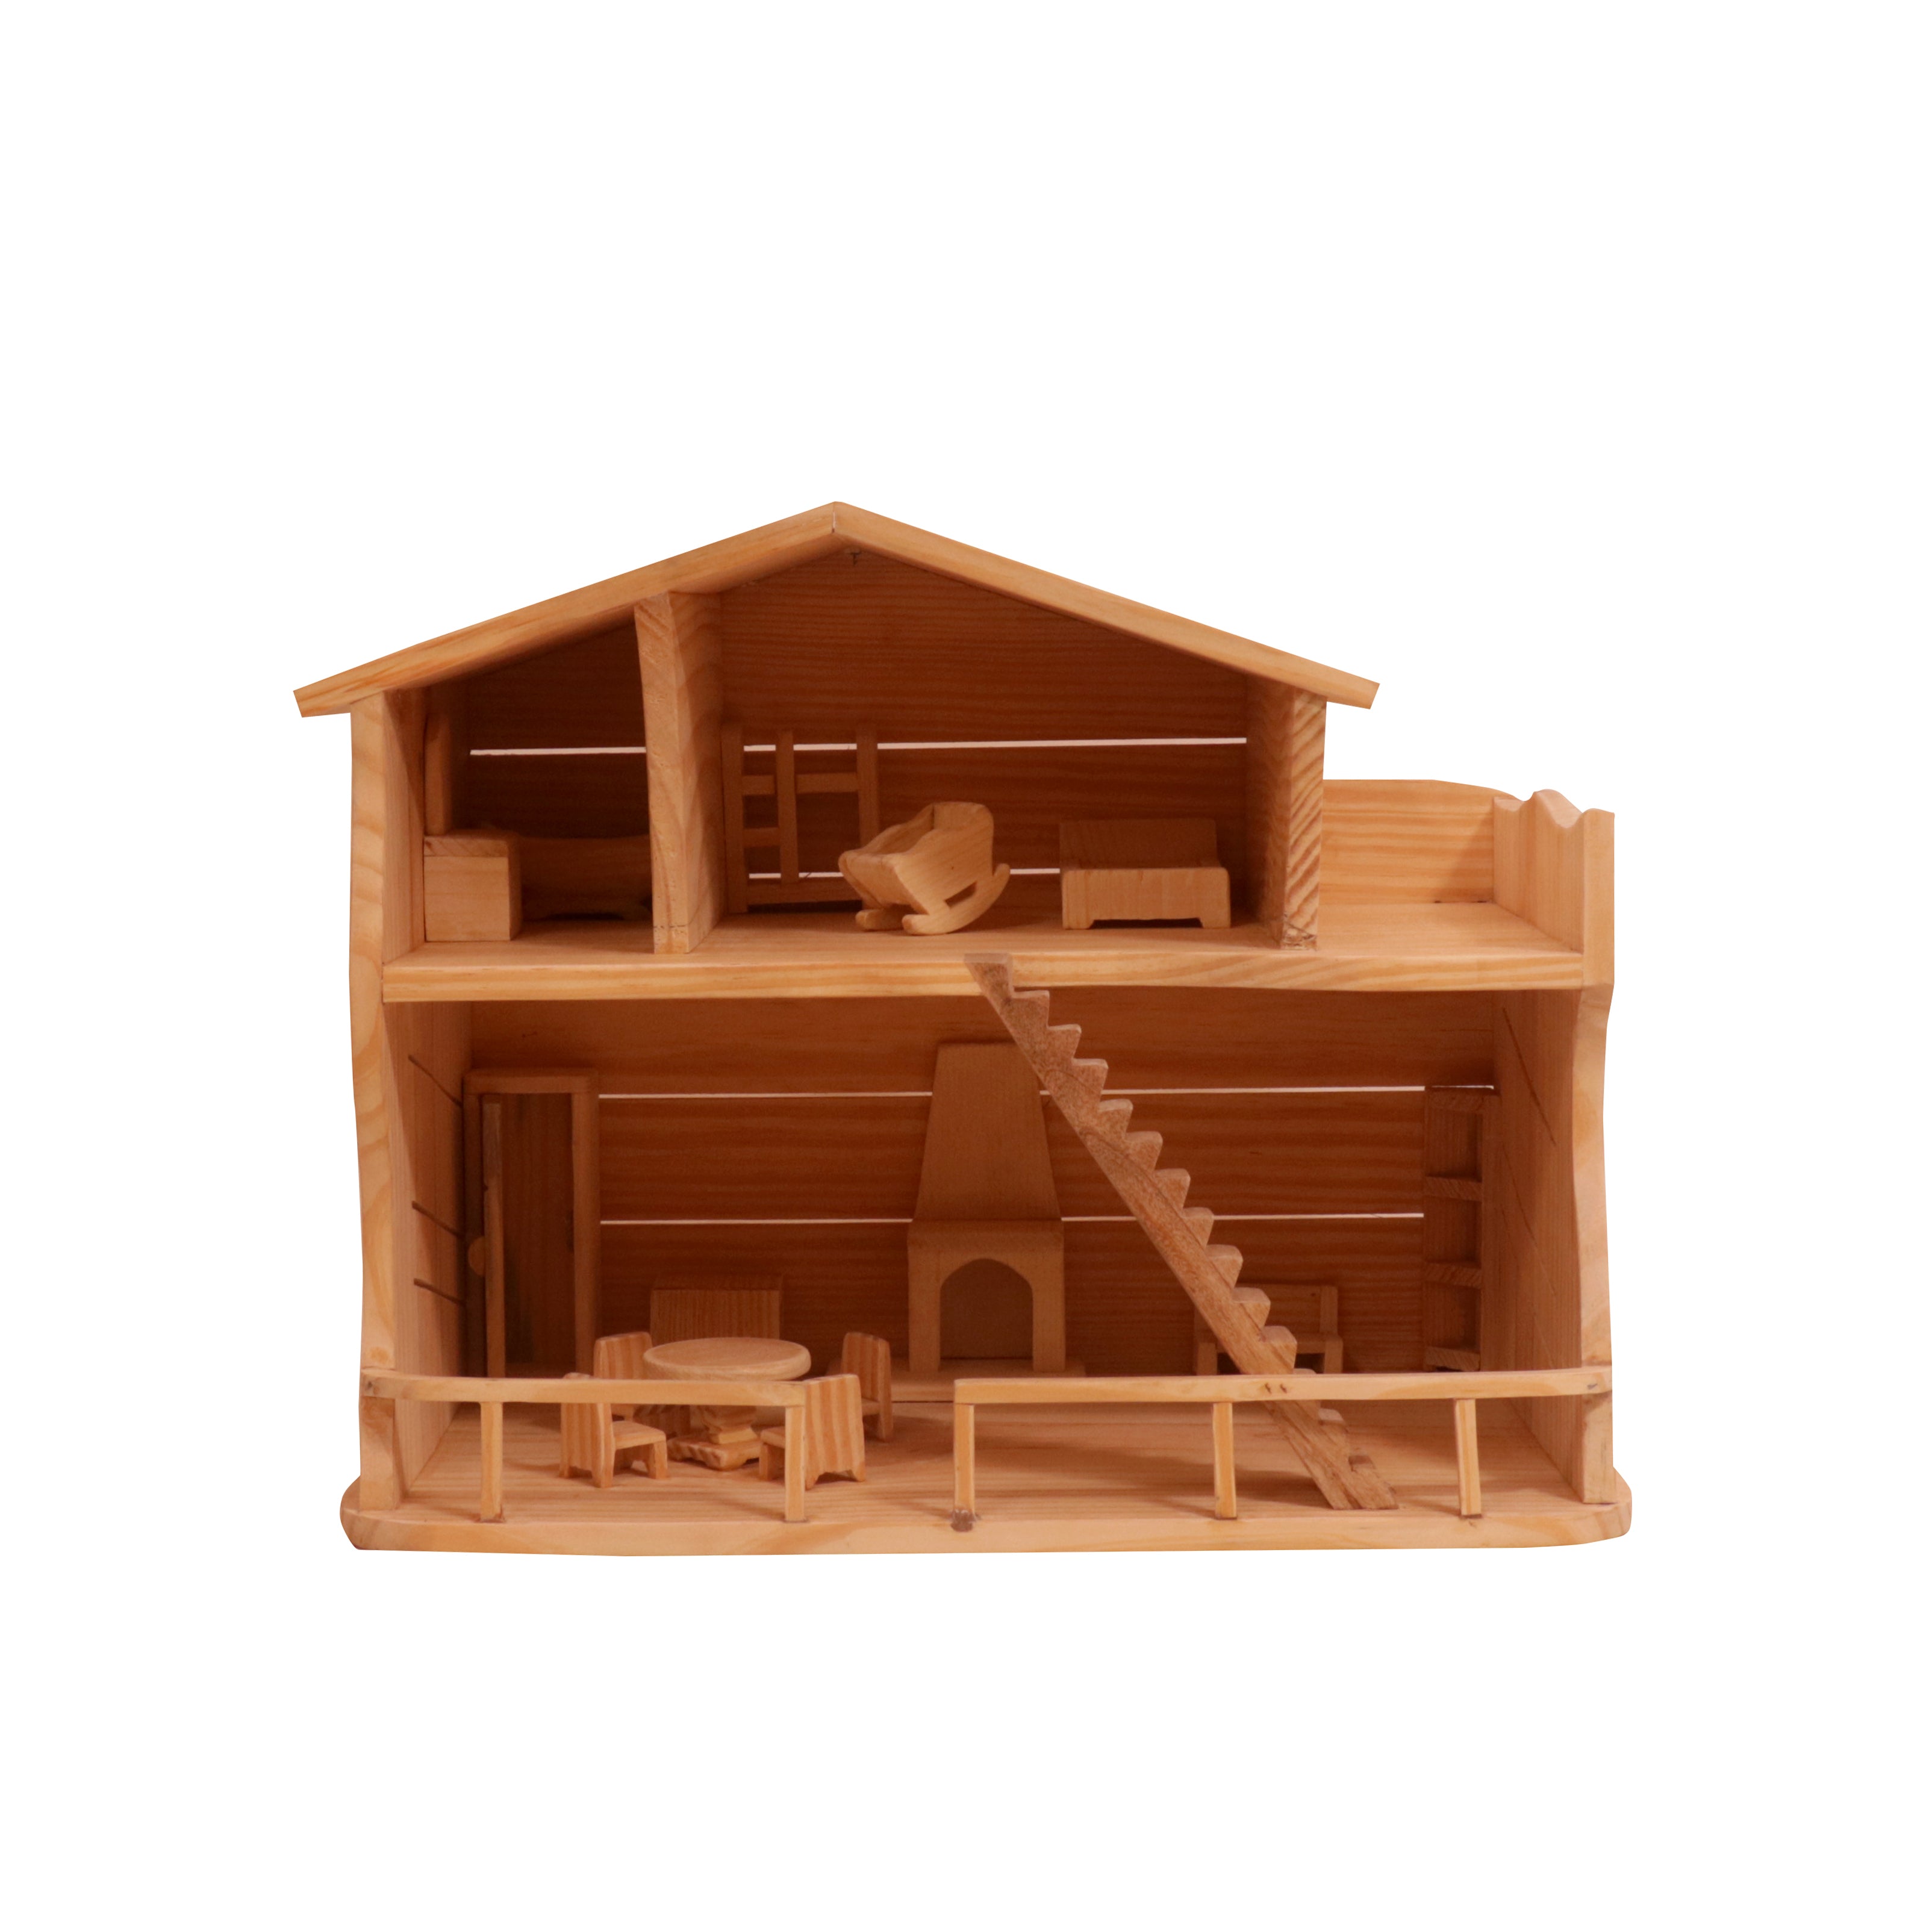 Pine wood Miniature House décor Wooden House